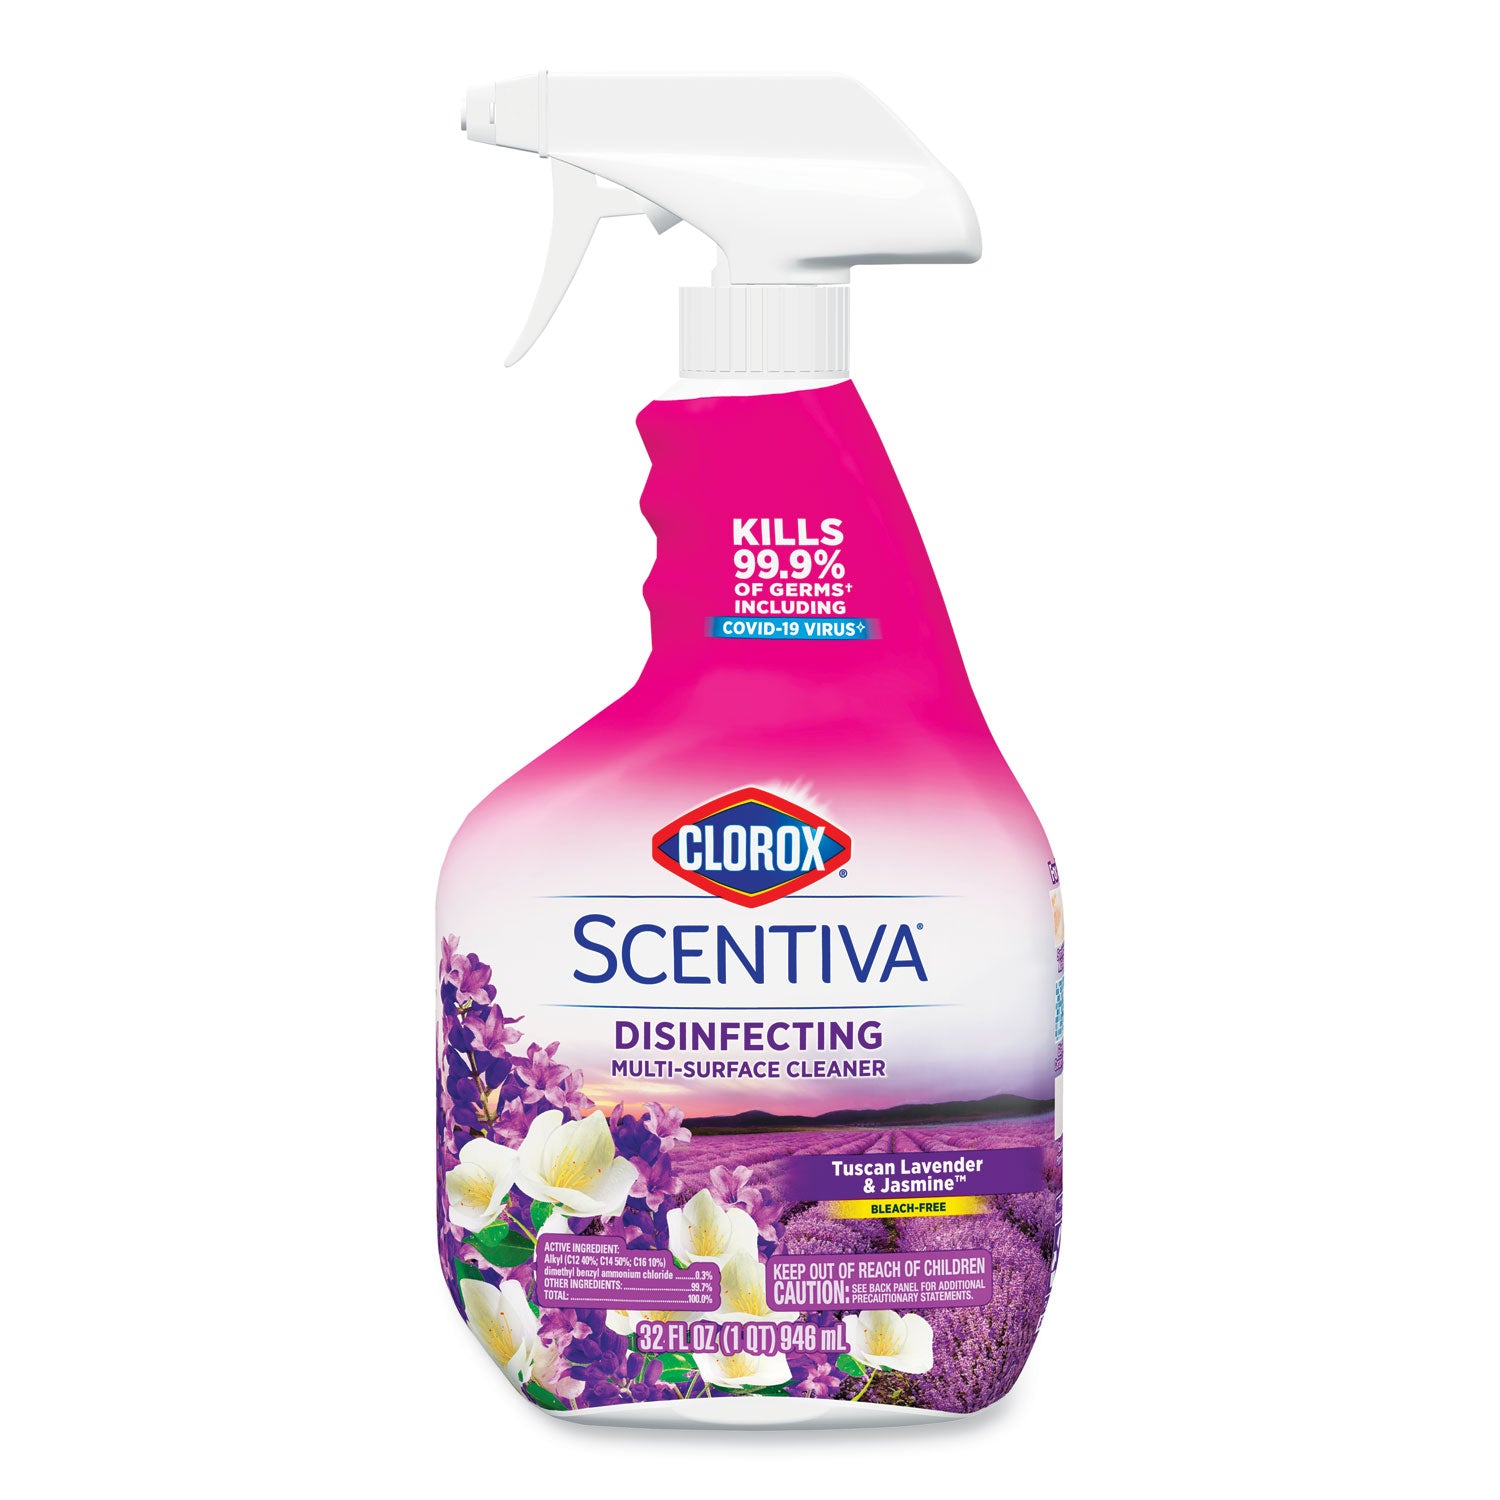 scentiva-multi-surface-cleaner-tuscan-lavender-and-jasmine-32oz-spray-bottle_clo31387ea - 1